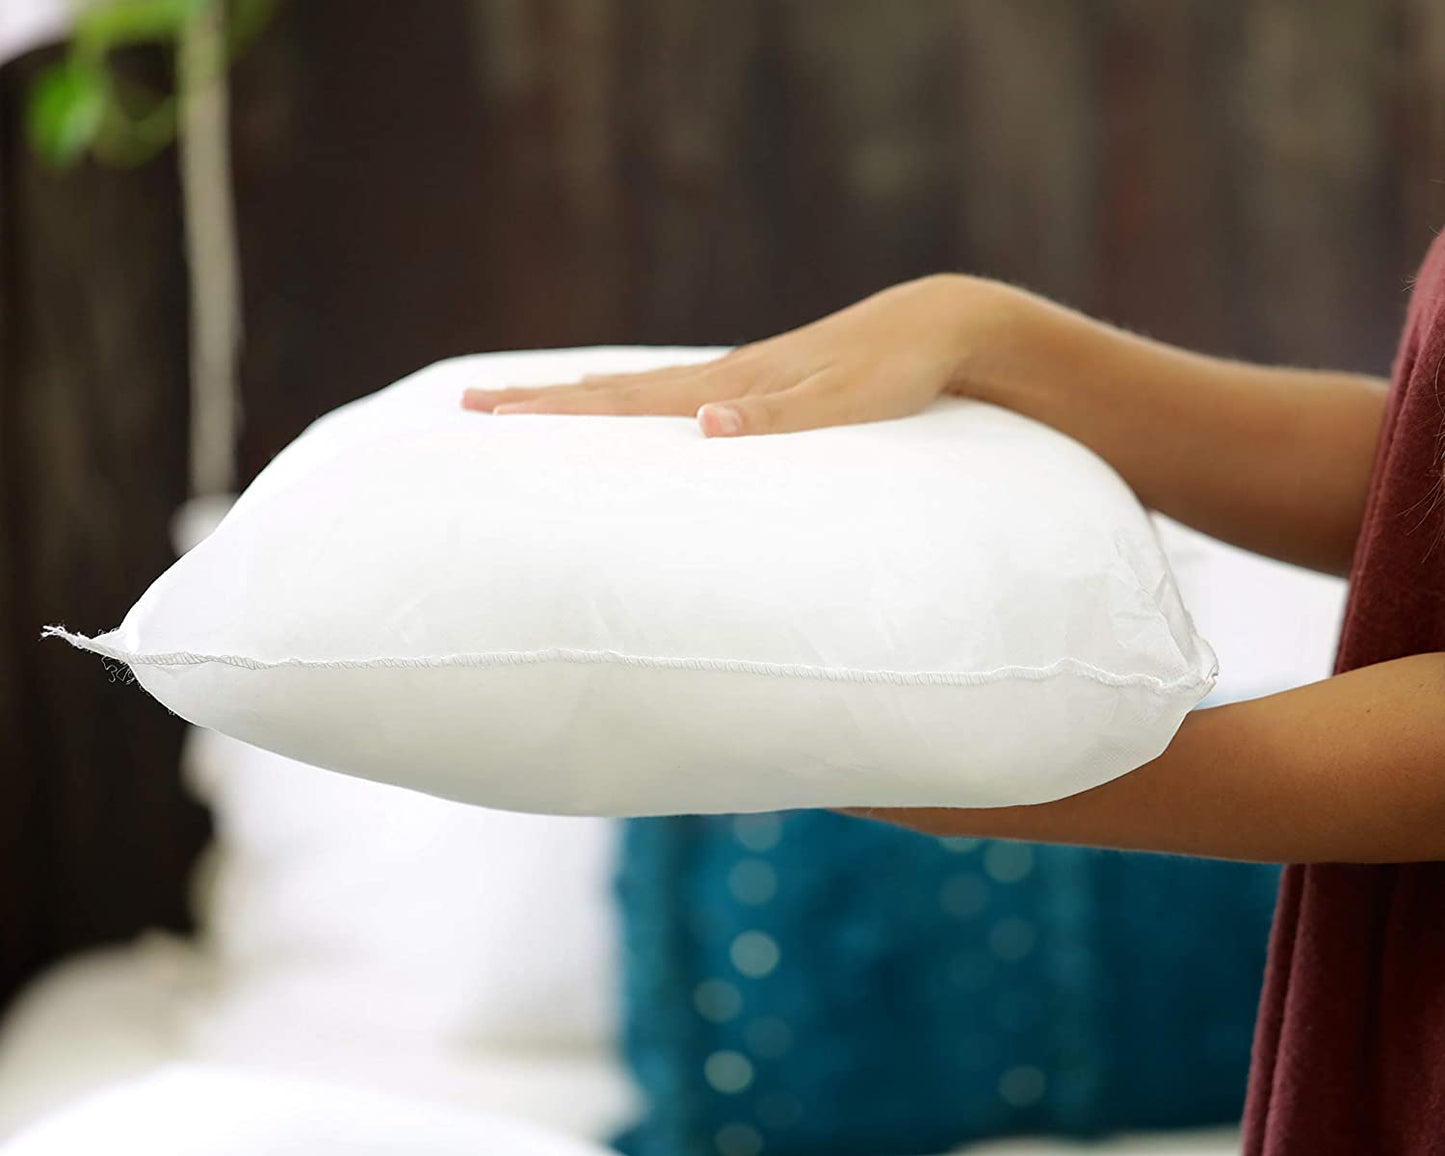 Foamily Premium Hypoallergenic Stuffer Pillow Insert Sham Square Form Polyester, 12" L X 12" W, Standard/White